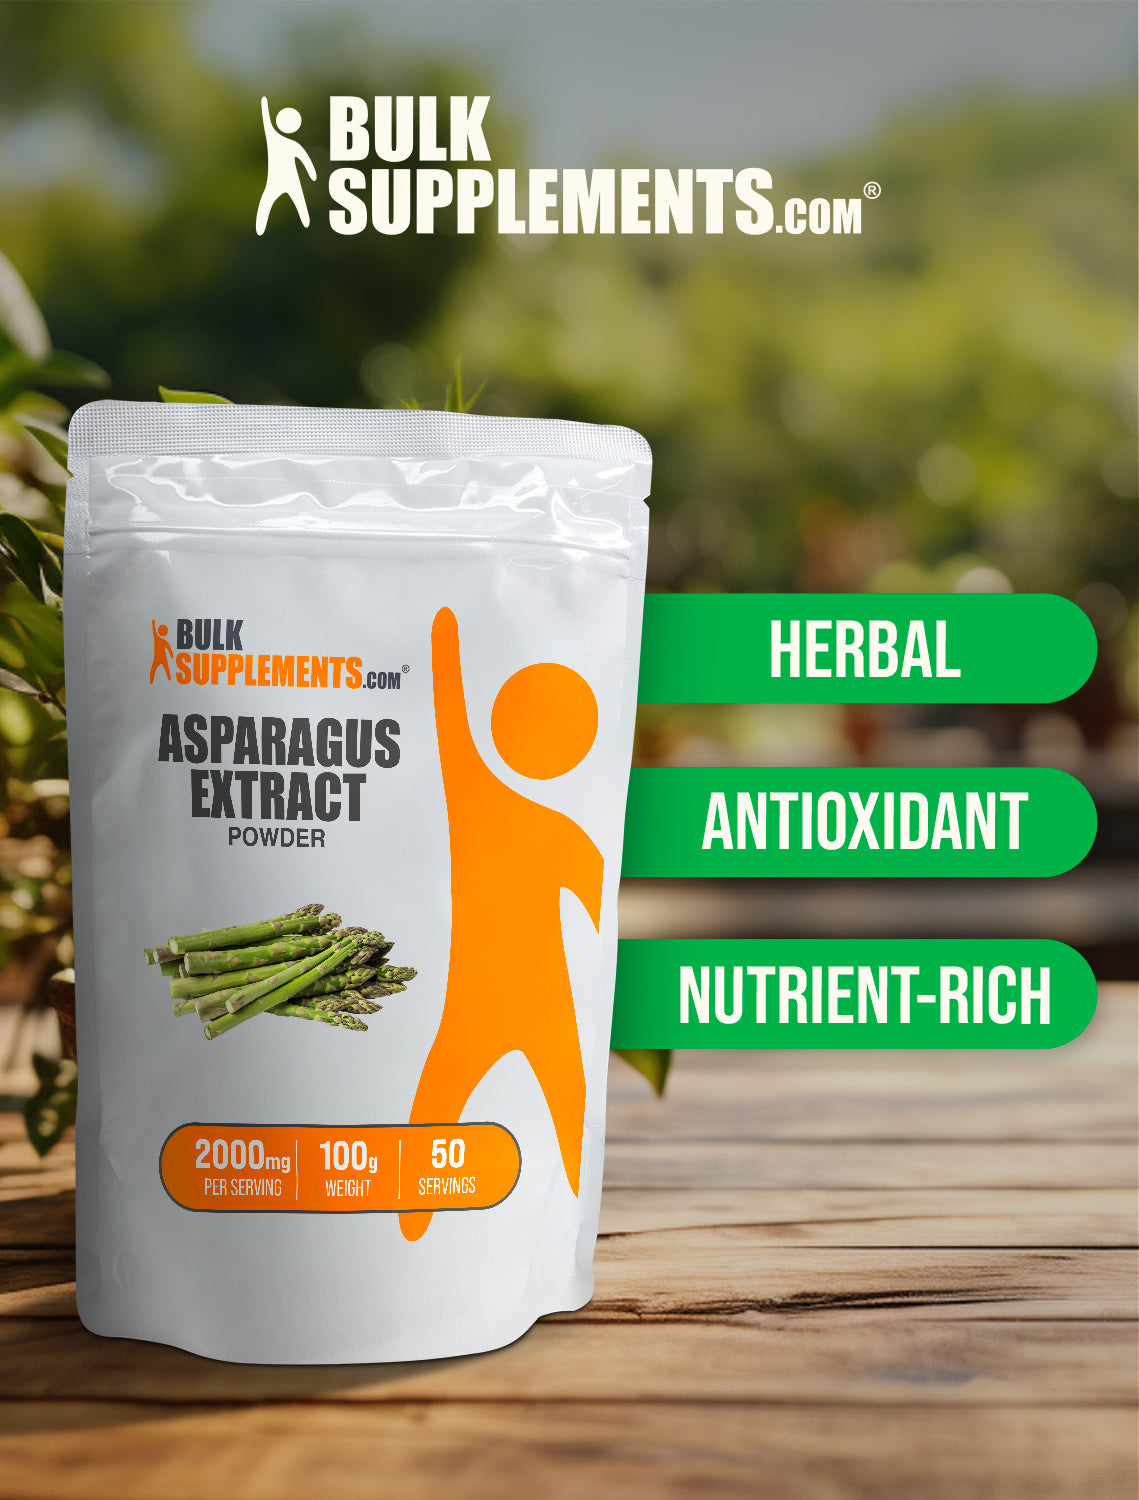 Asparagus Extract powder keyword image 100g